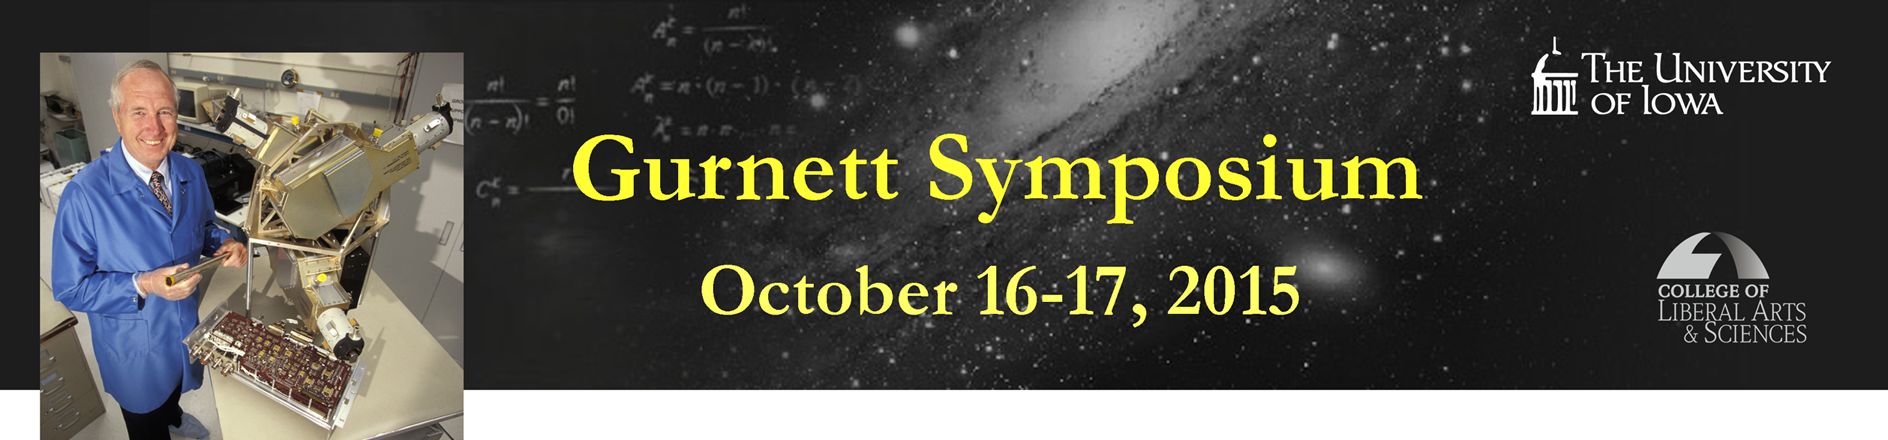 Gurnett Symposium